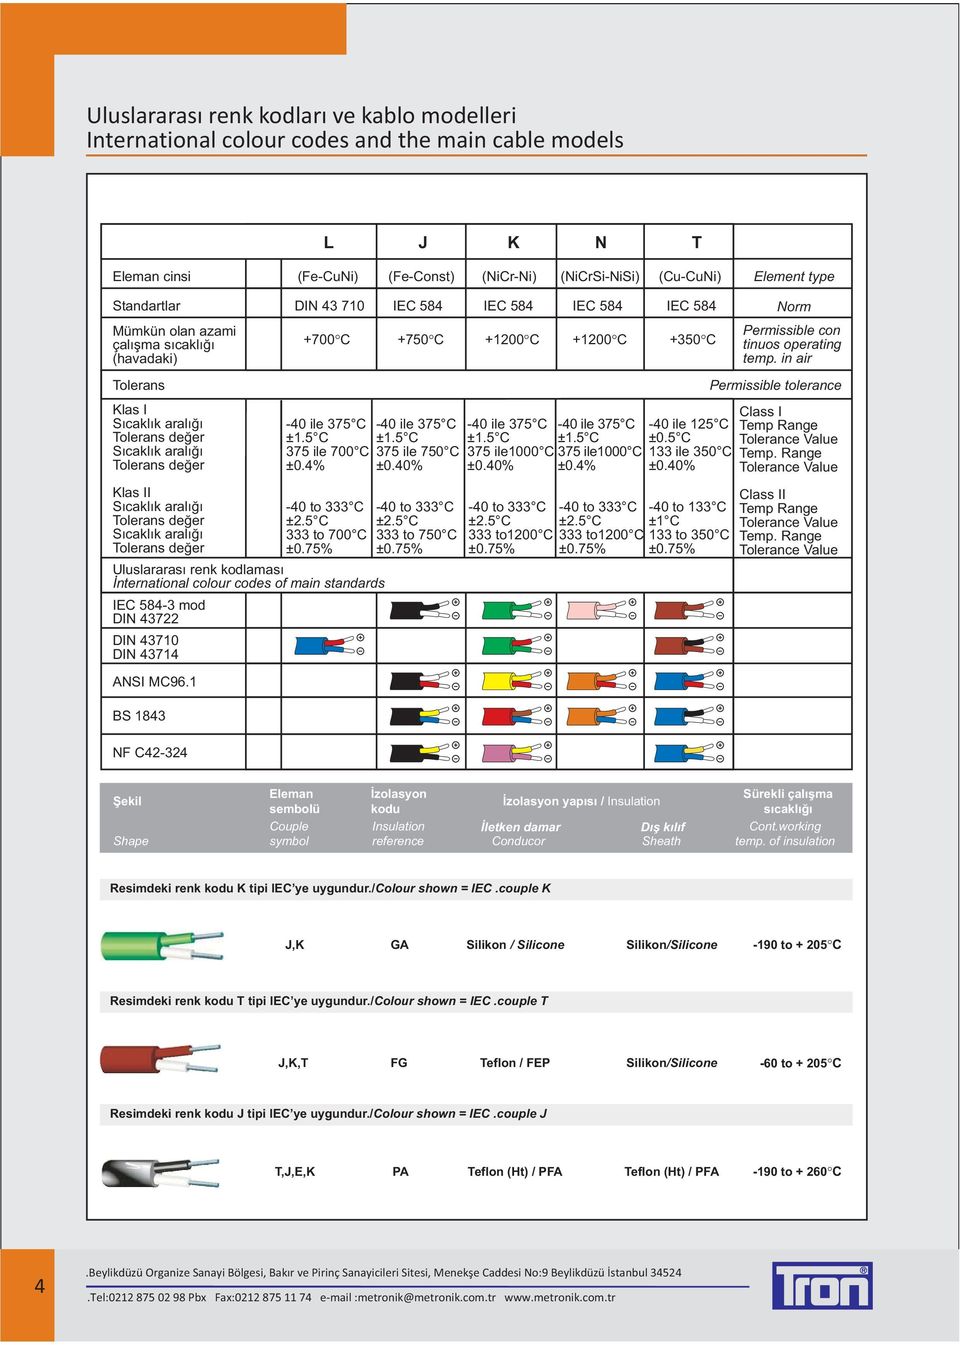 Uluslararasý renk kodlamasý Ýnternational colour codes of main standards IEC 584-3 mod DIN 43722 DIN 43710 DIN 43714 ANSI MC96.